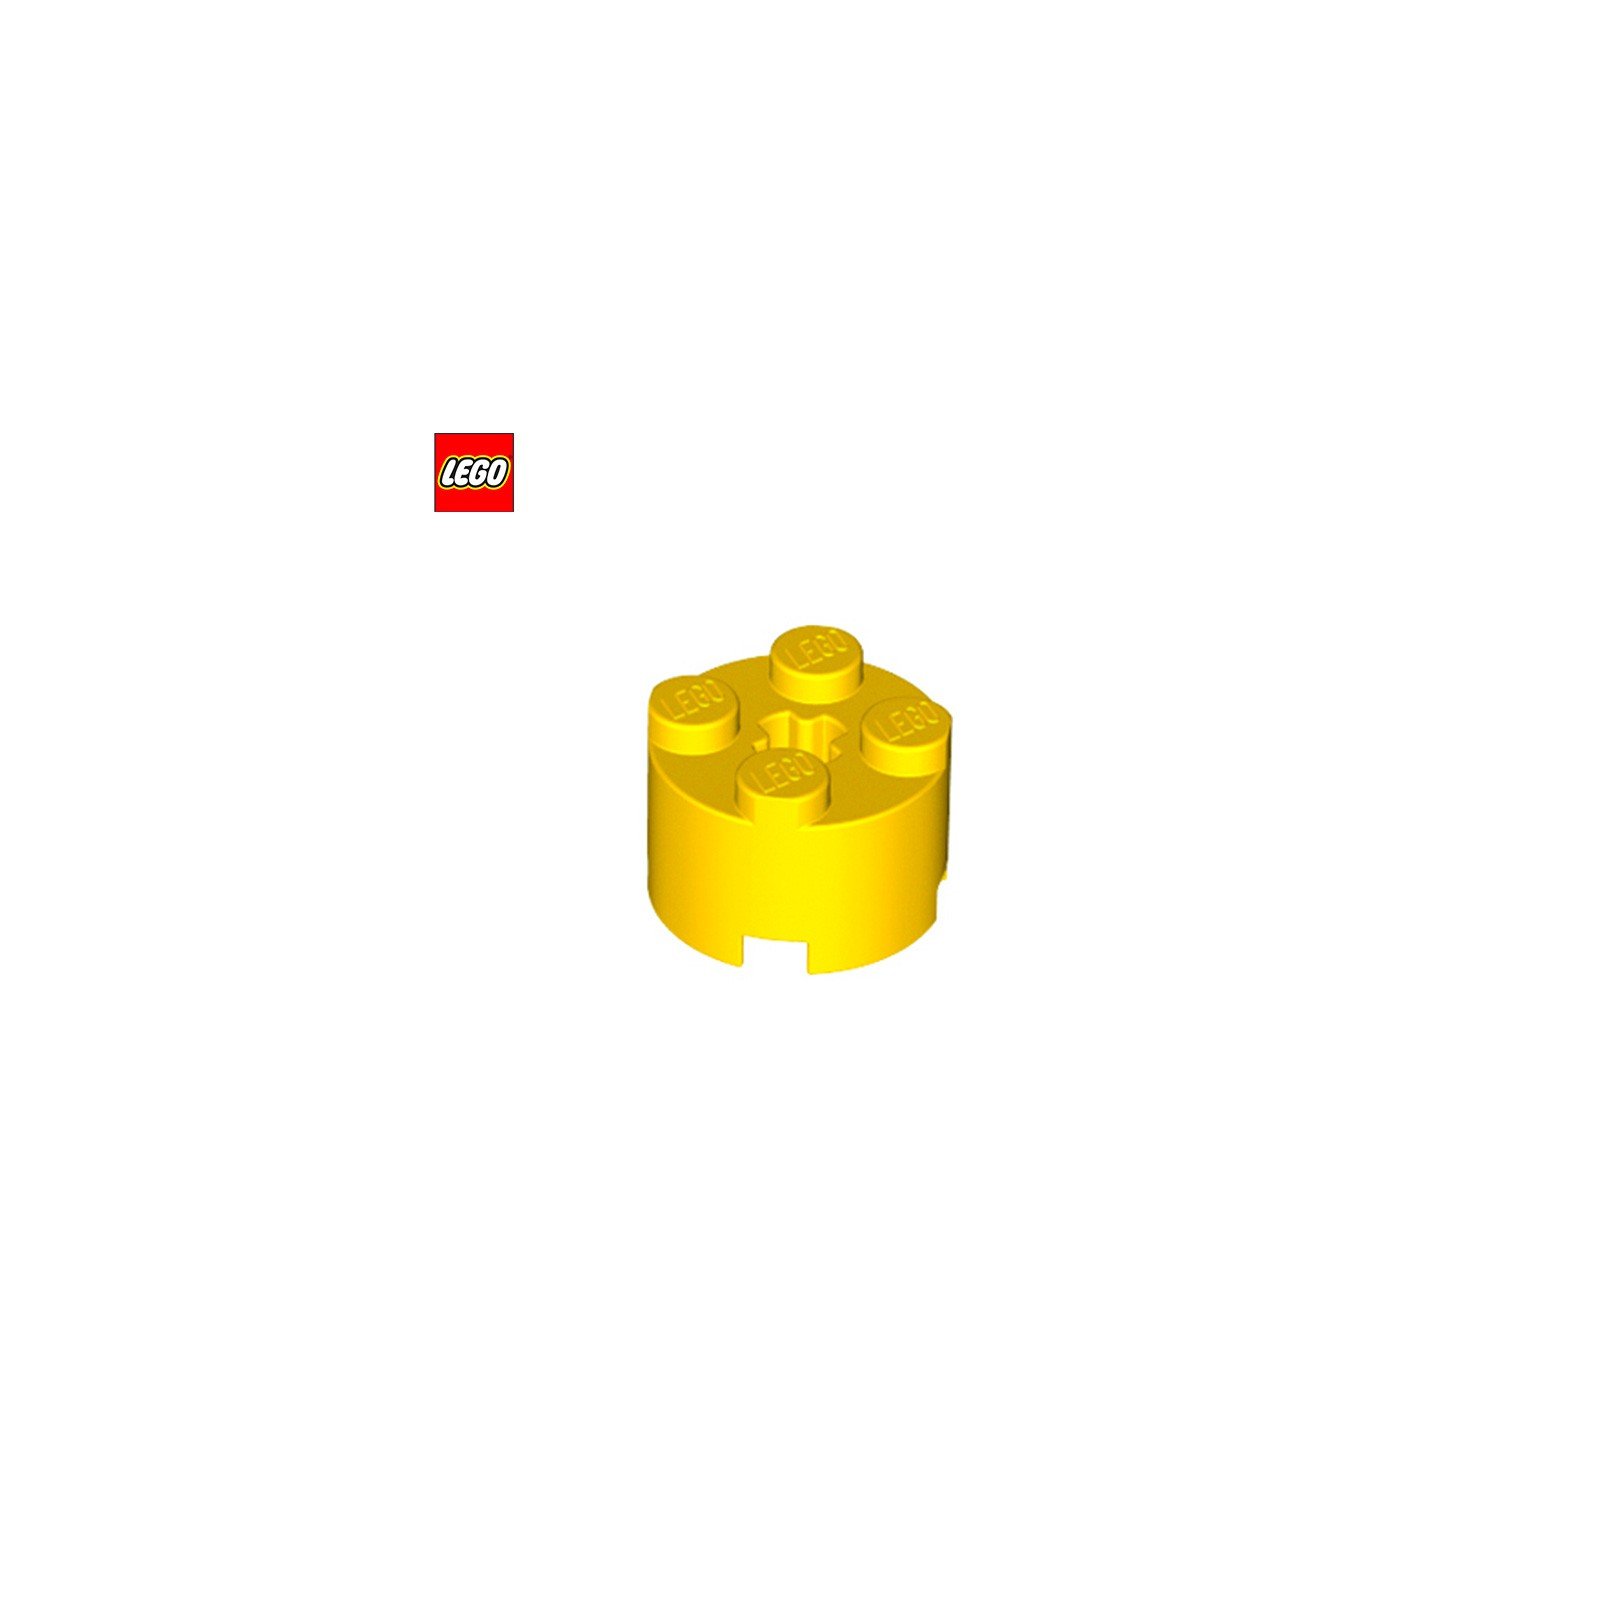 Brick Round 2 x 2 with Axle Hole - LEGO® Part 3941